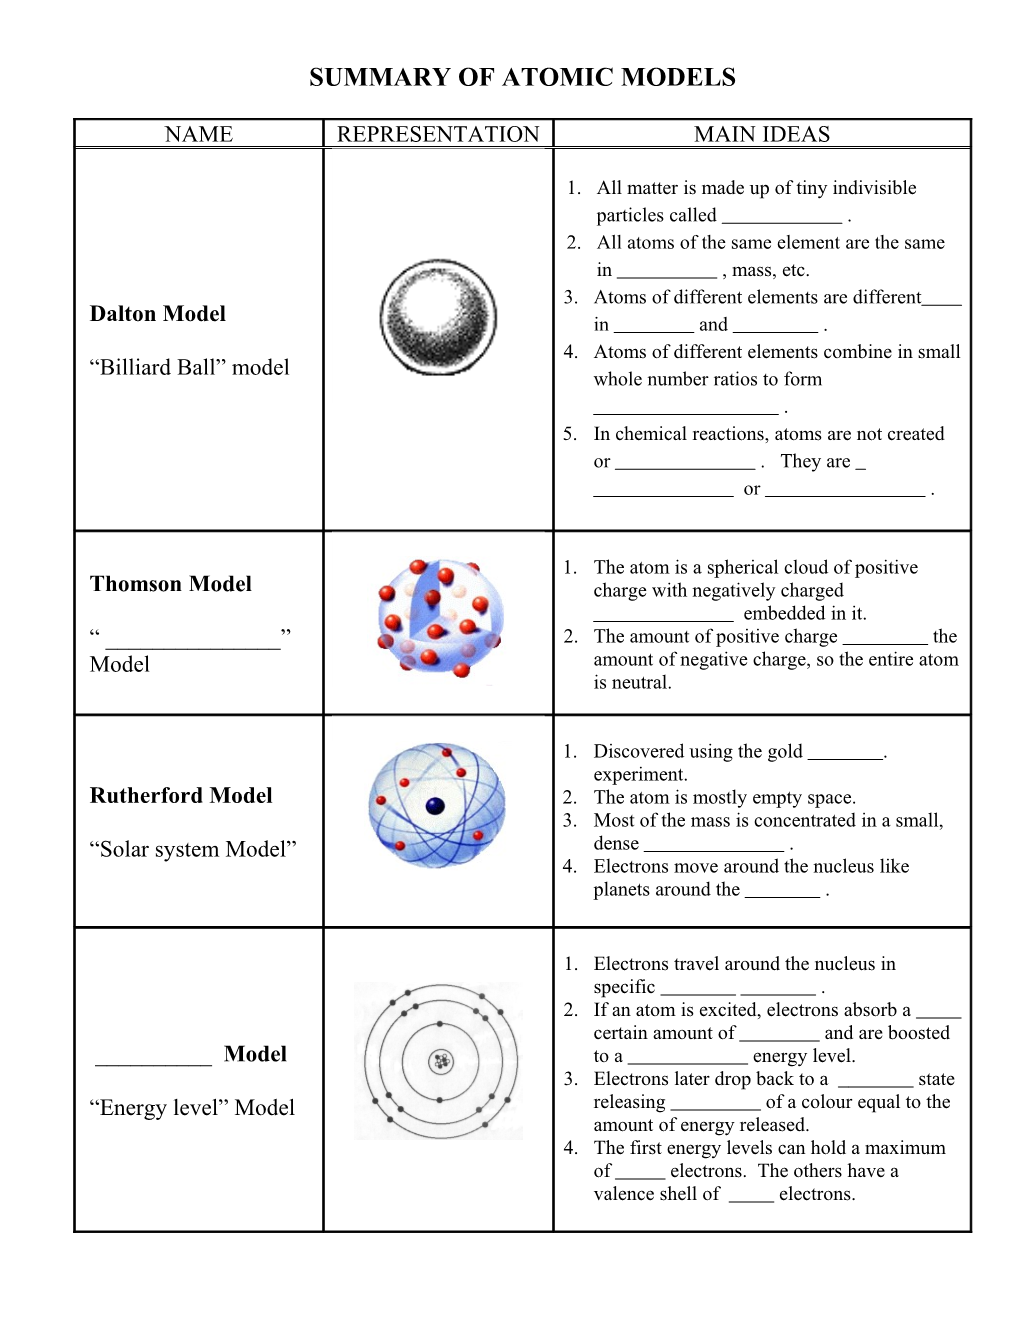 Summary of Atomic Models